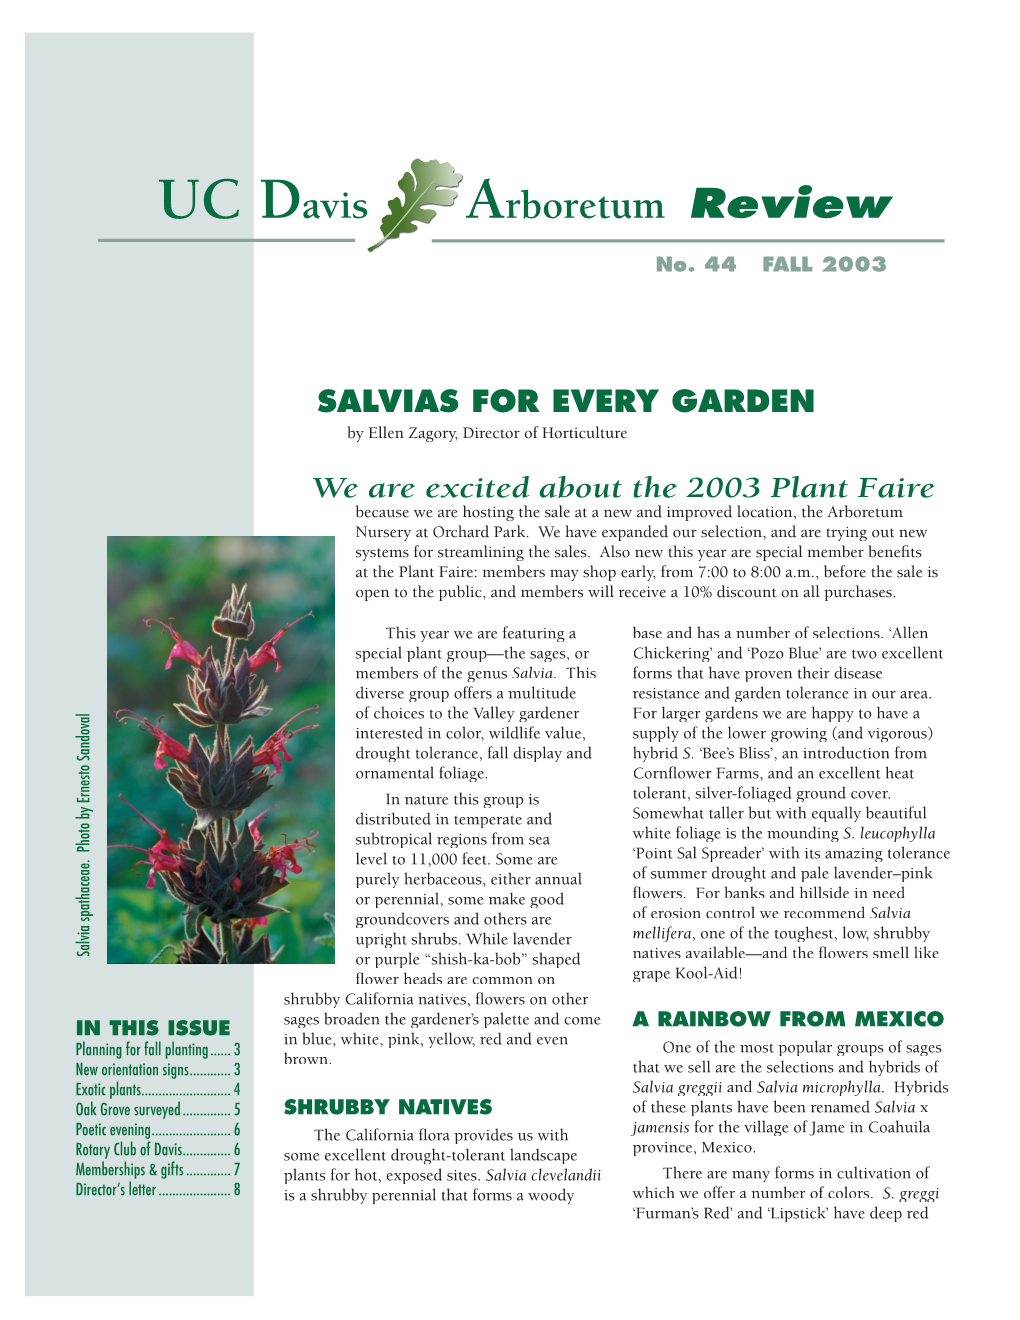 SALVIAS for EVERY GARDEN by Ellen Zagory, Director of Horticulture